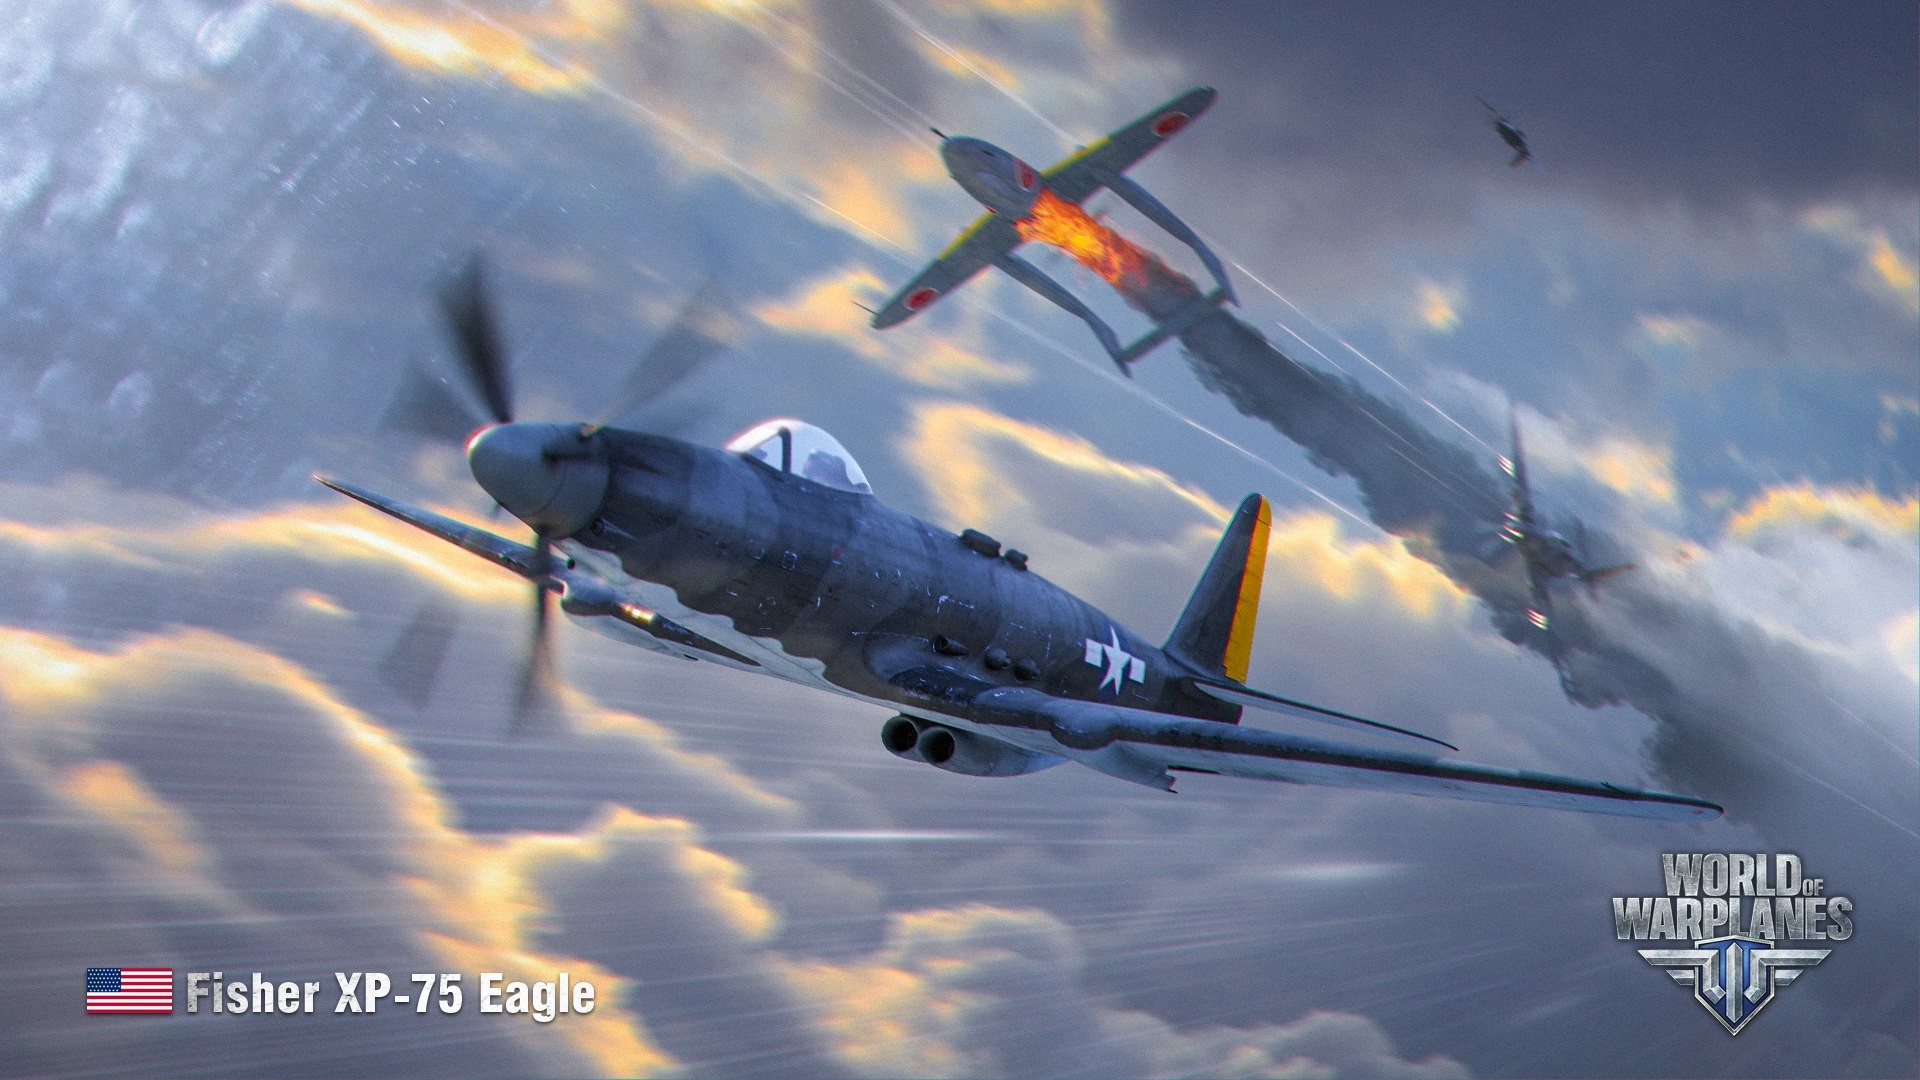 World Of Warplanes, Warplanes, Airplane, Wargaming, Video Games Wallpaper